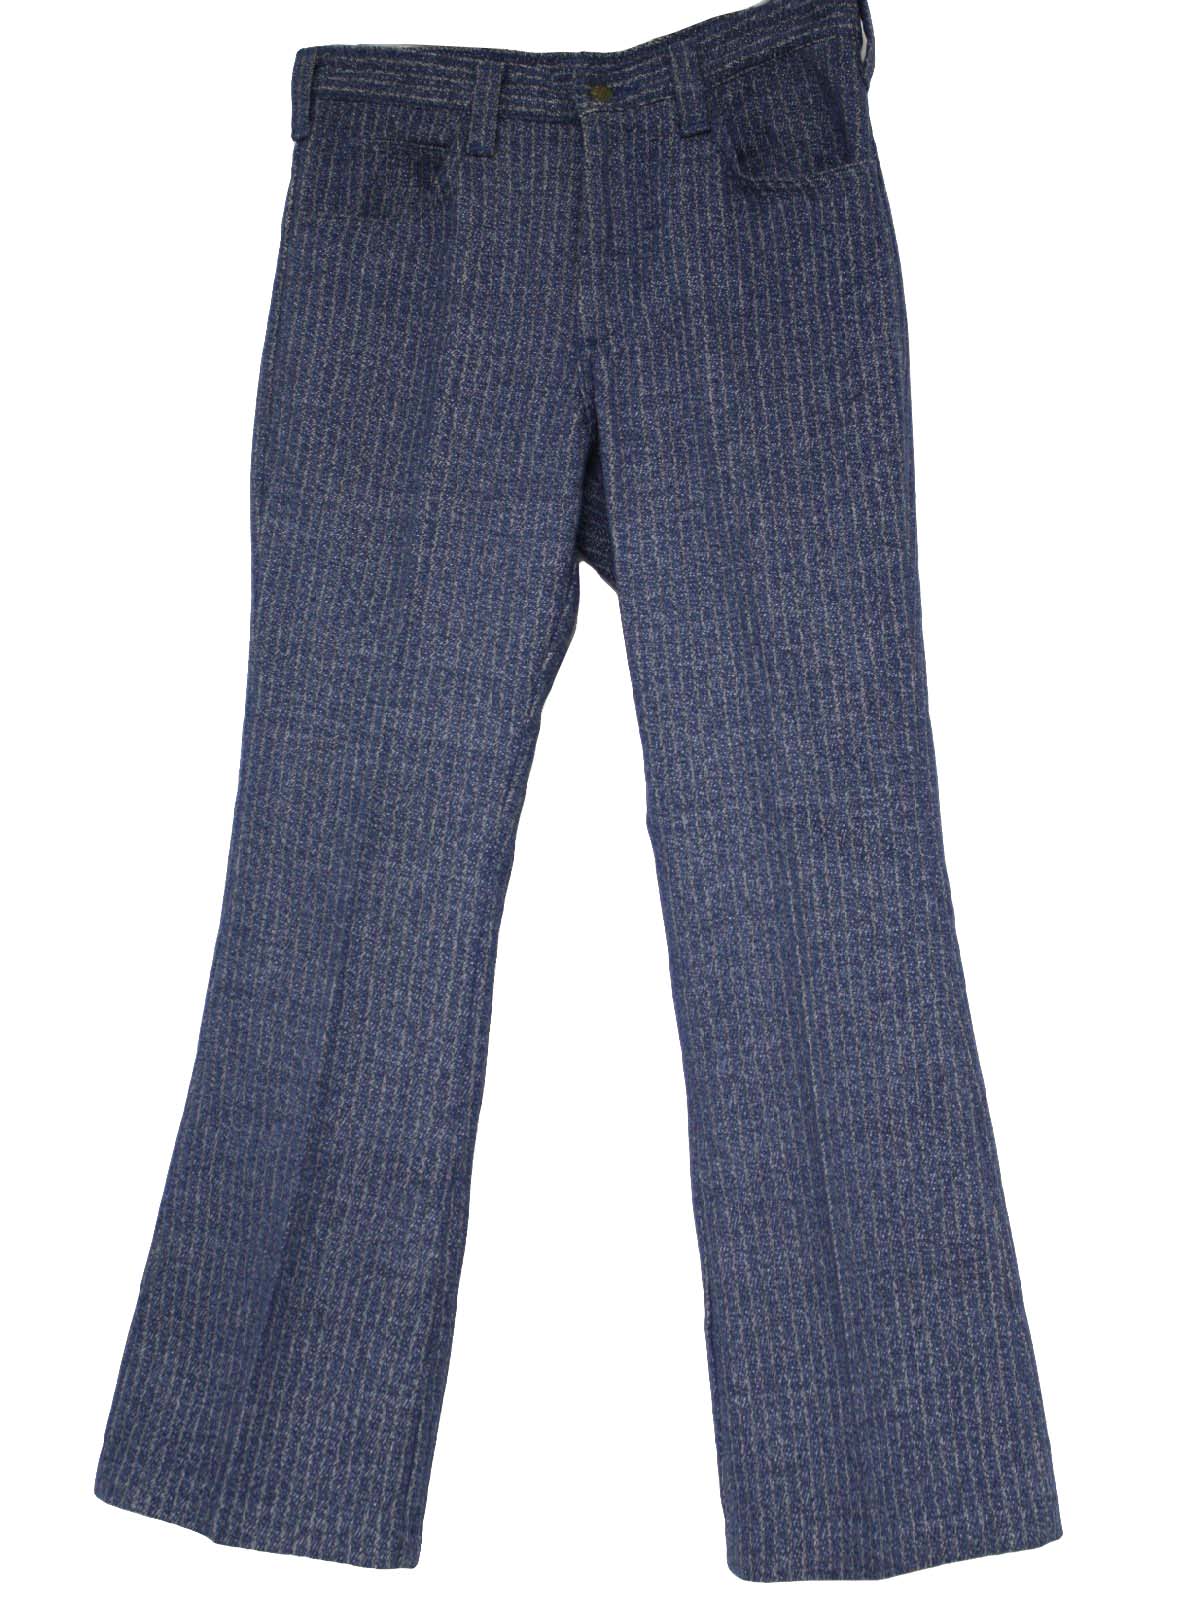 1970's Bellbottom Pants (Lee): 70s -Lee- Mens blue, black and white ...